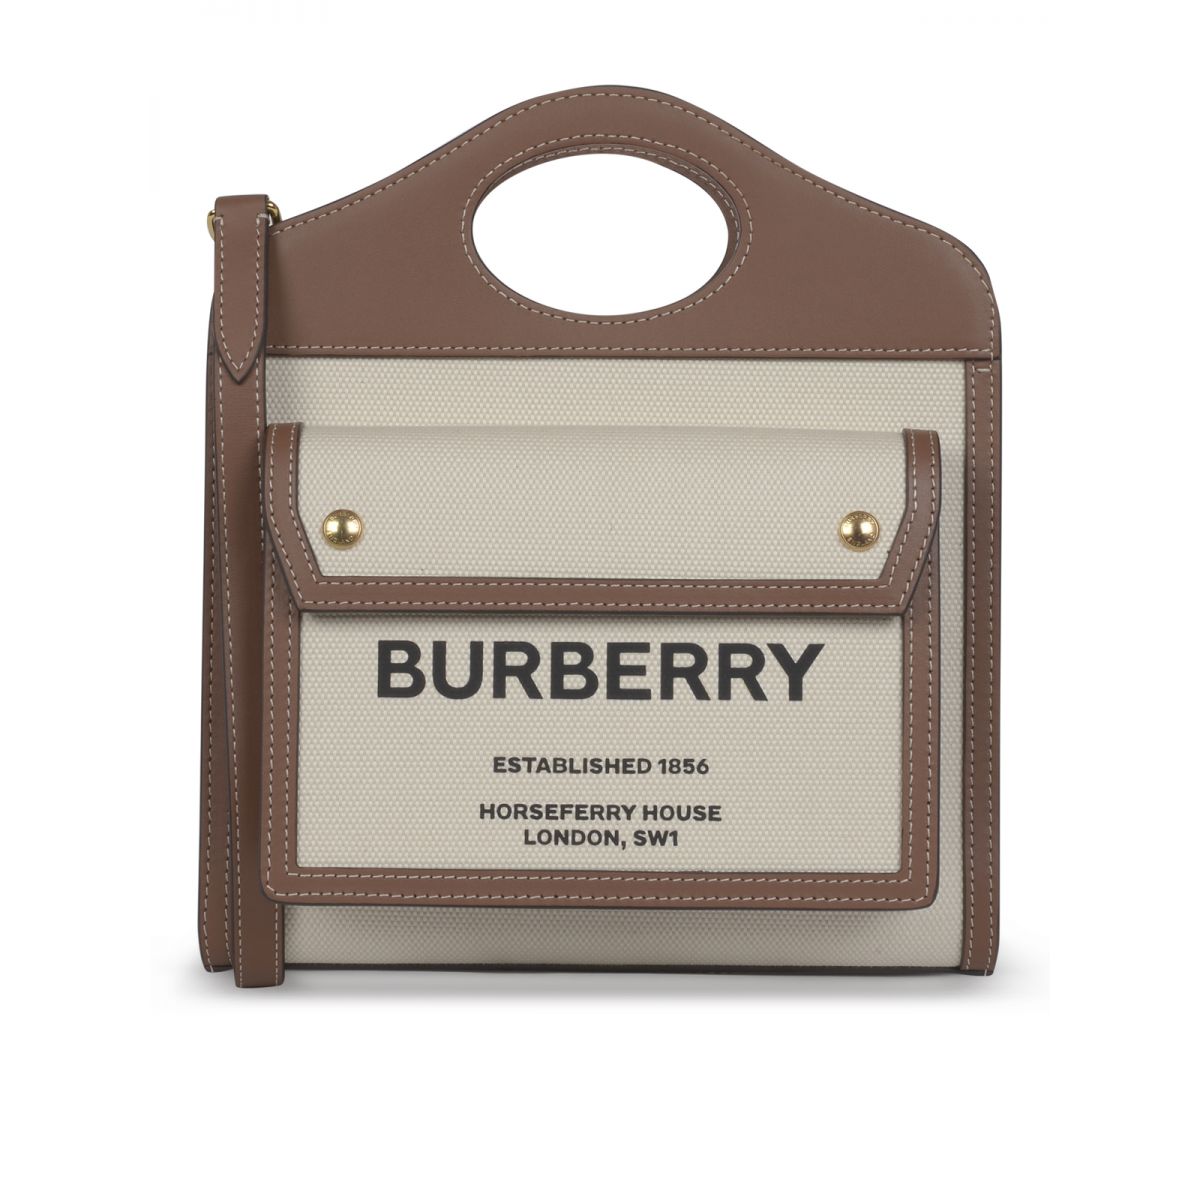 BURBERRY - Bolso shopper Pocket mini